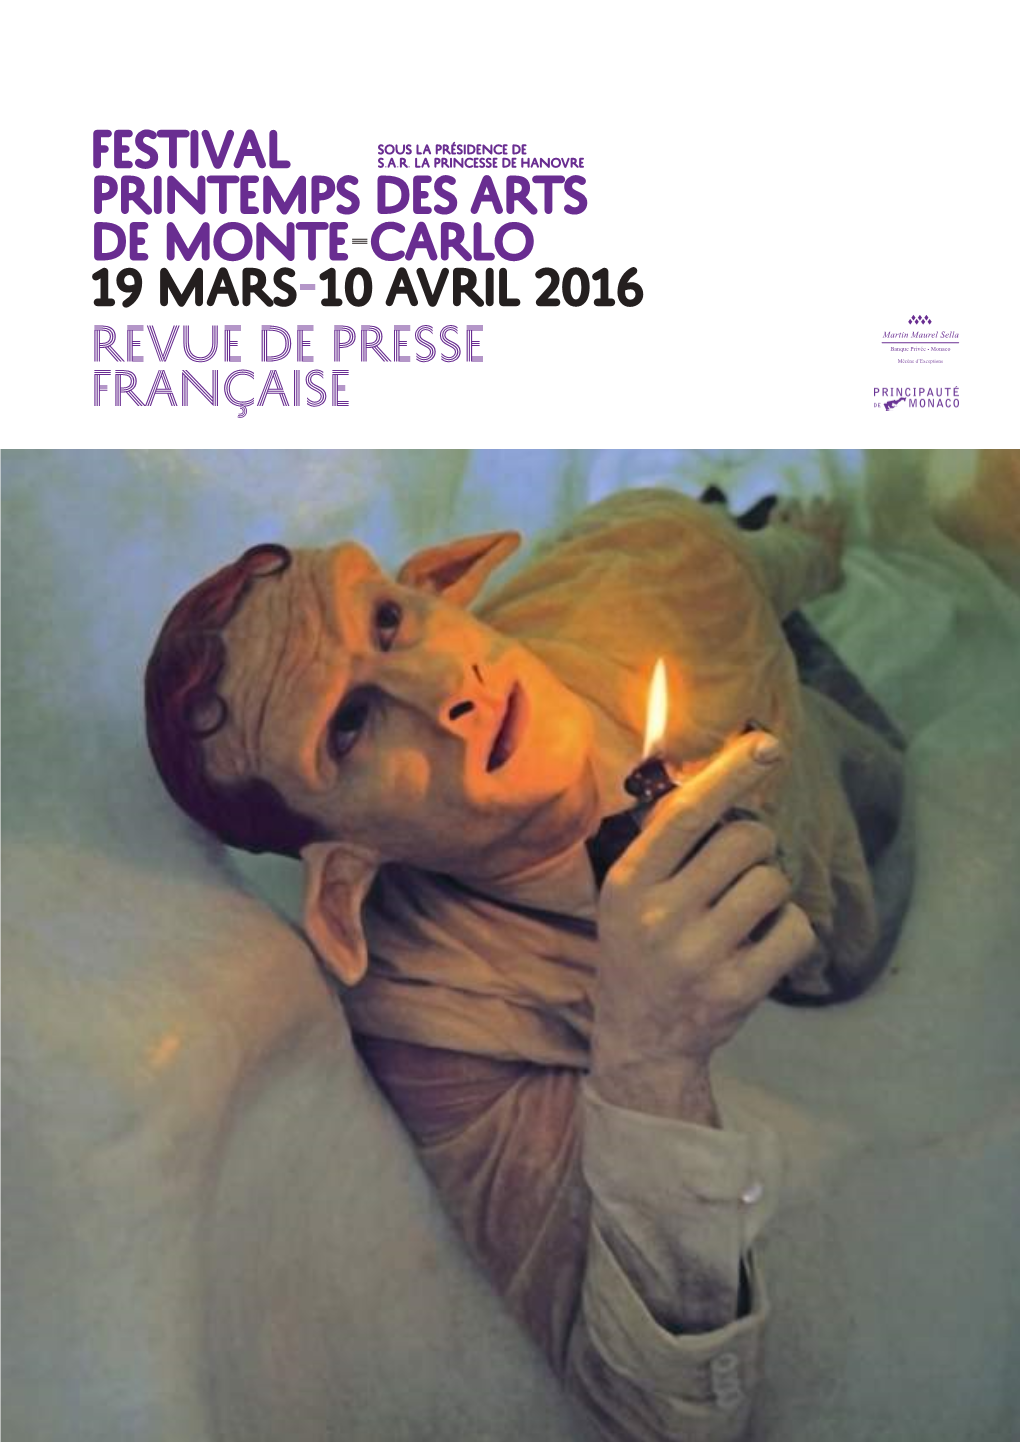 PRINTEMPS DES ARTS Festival DE MONTE-CARLO 19 Mars-10 Avril